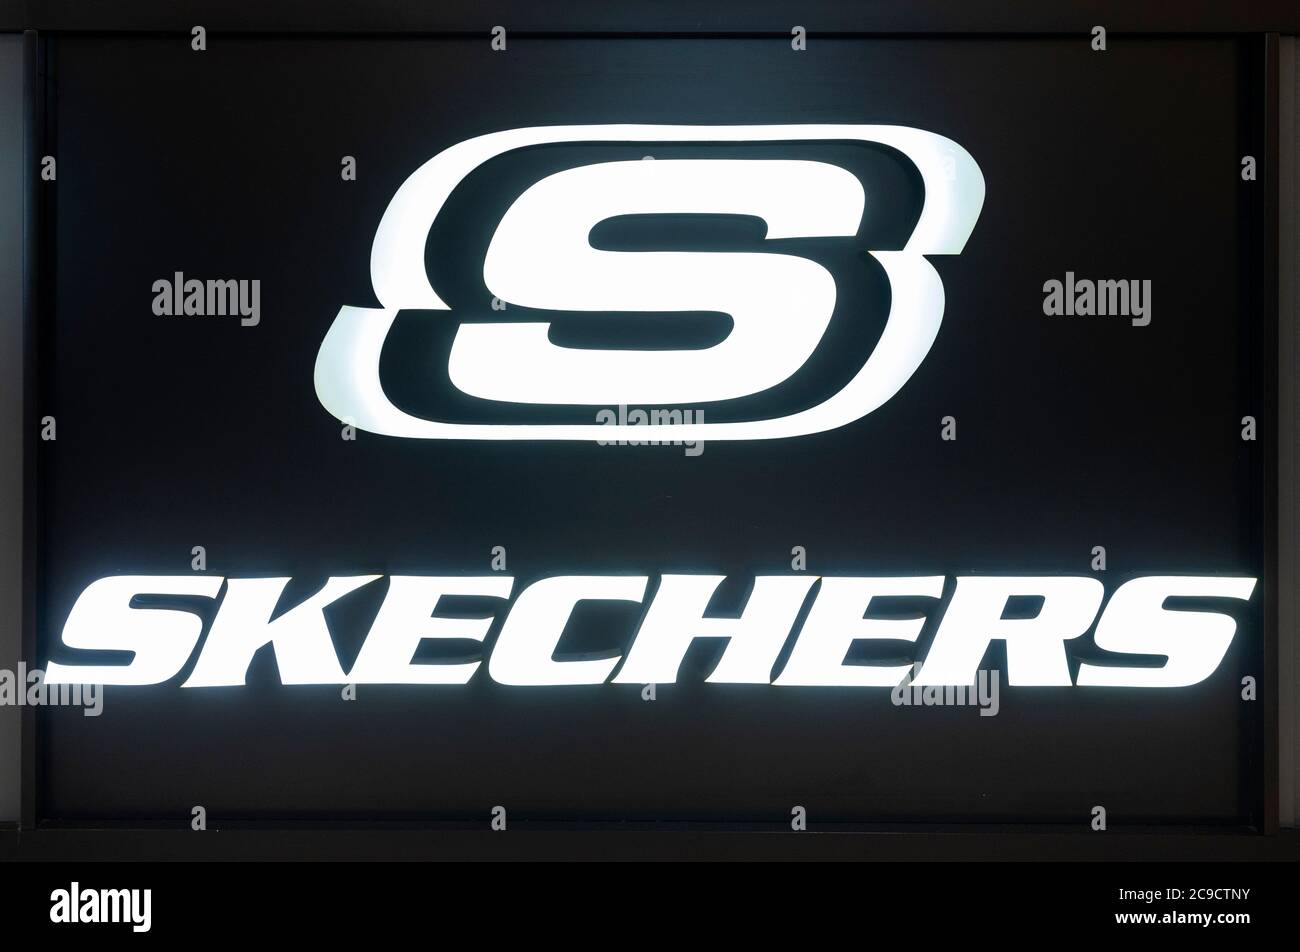 sketcher logo